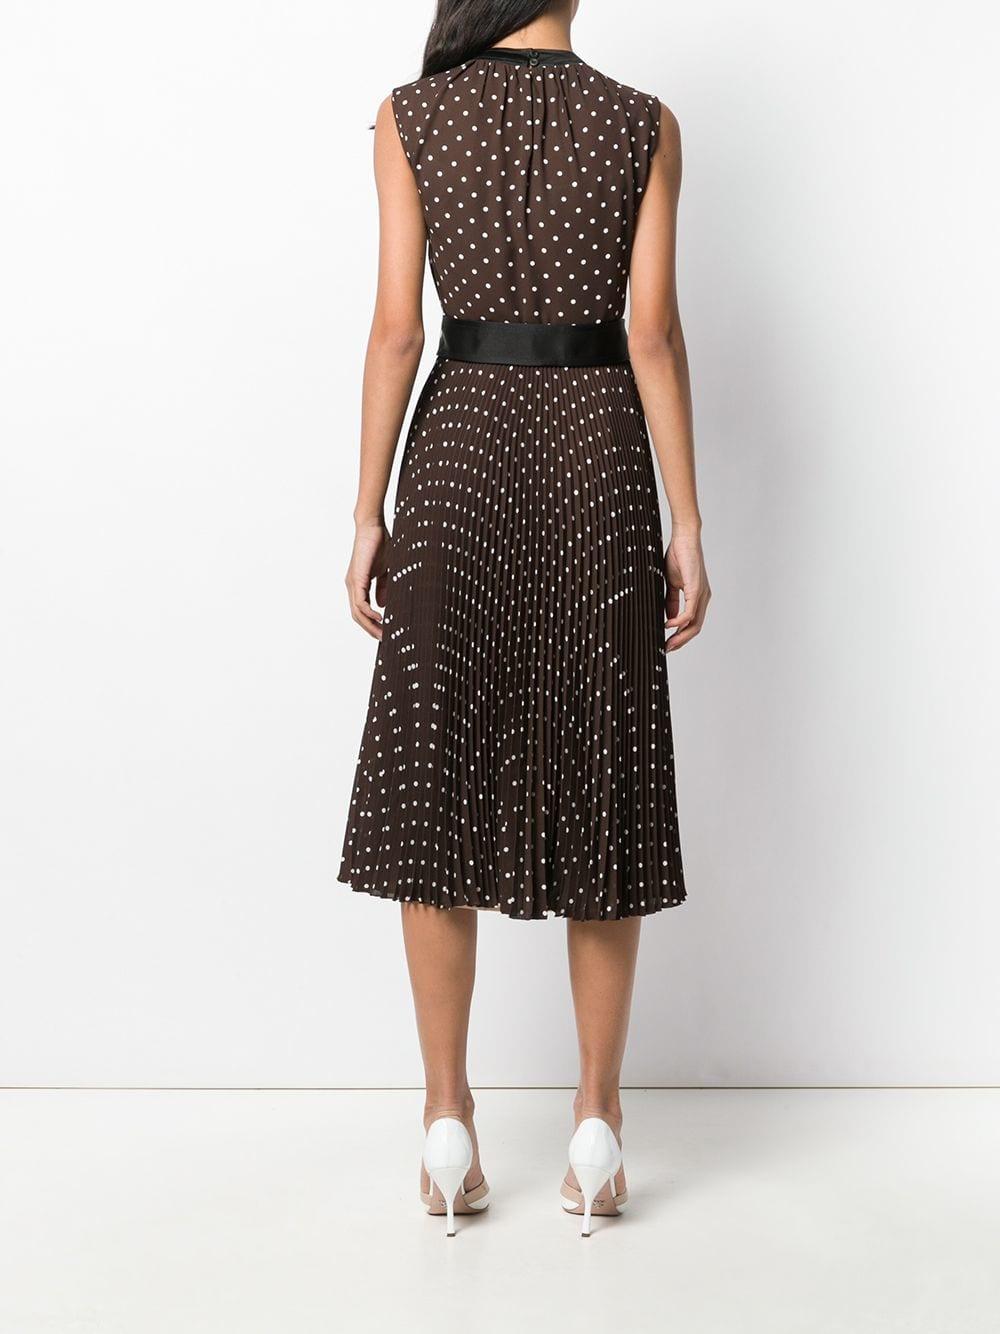 Prada Polka Dot Pleated Dress in Brown - Lyst